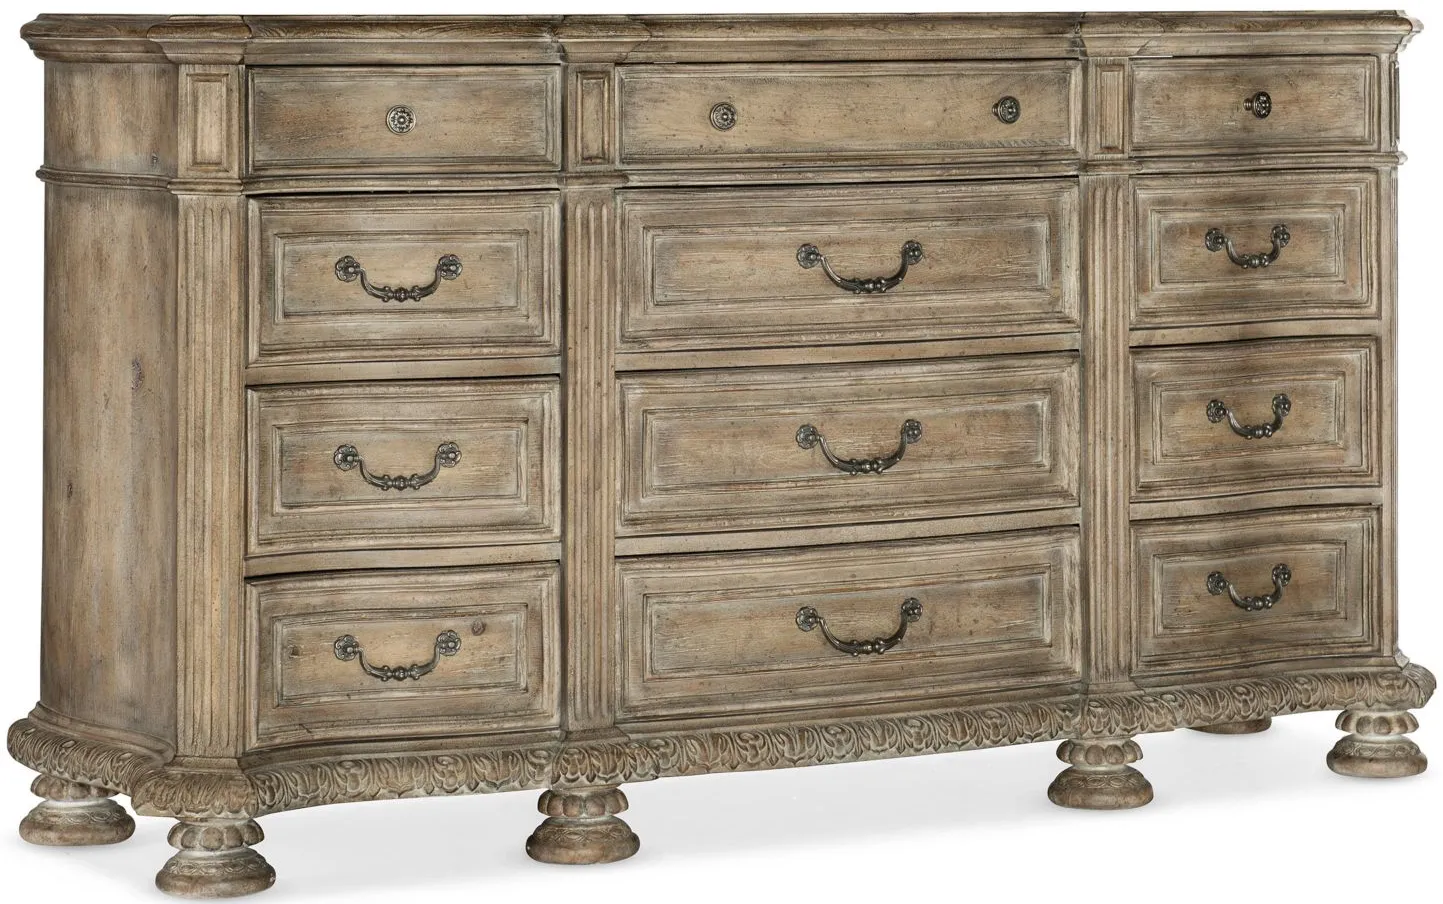 Castella Twelve Drawer Dresser in Brown by Hooker Furniture